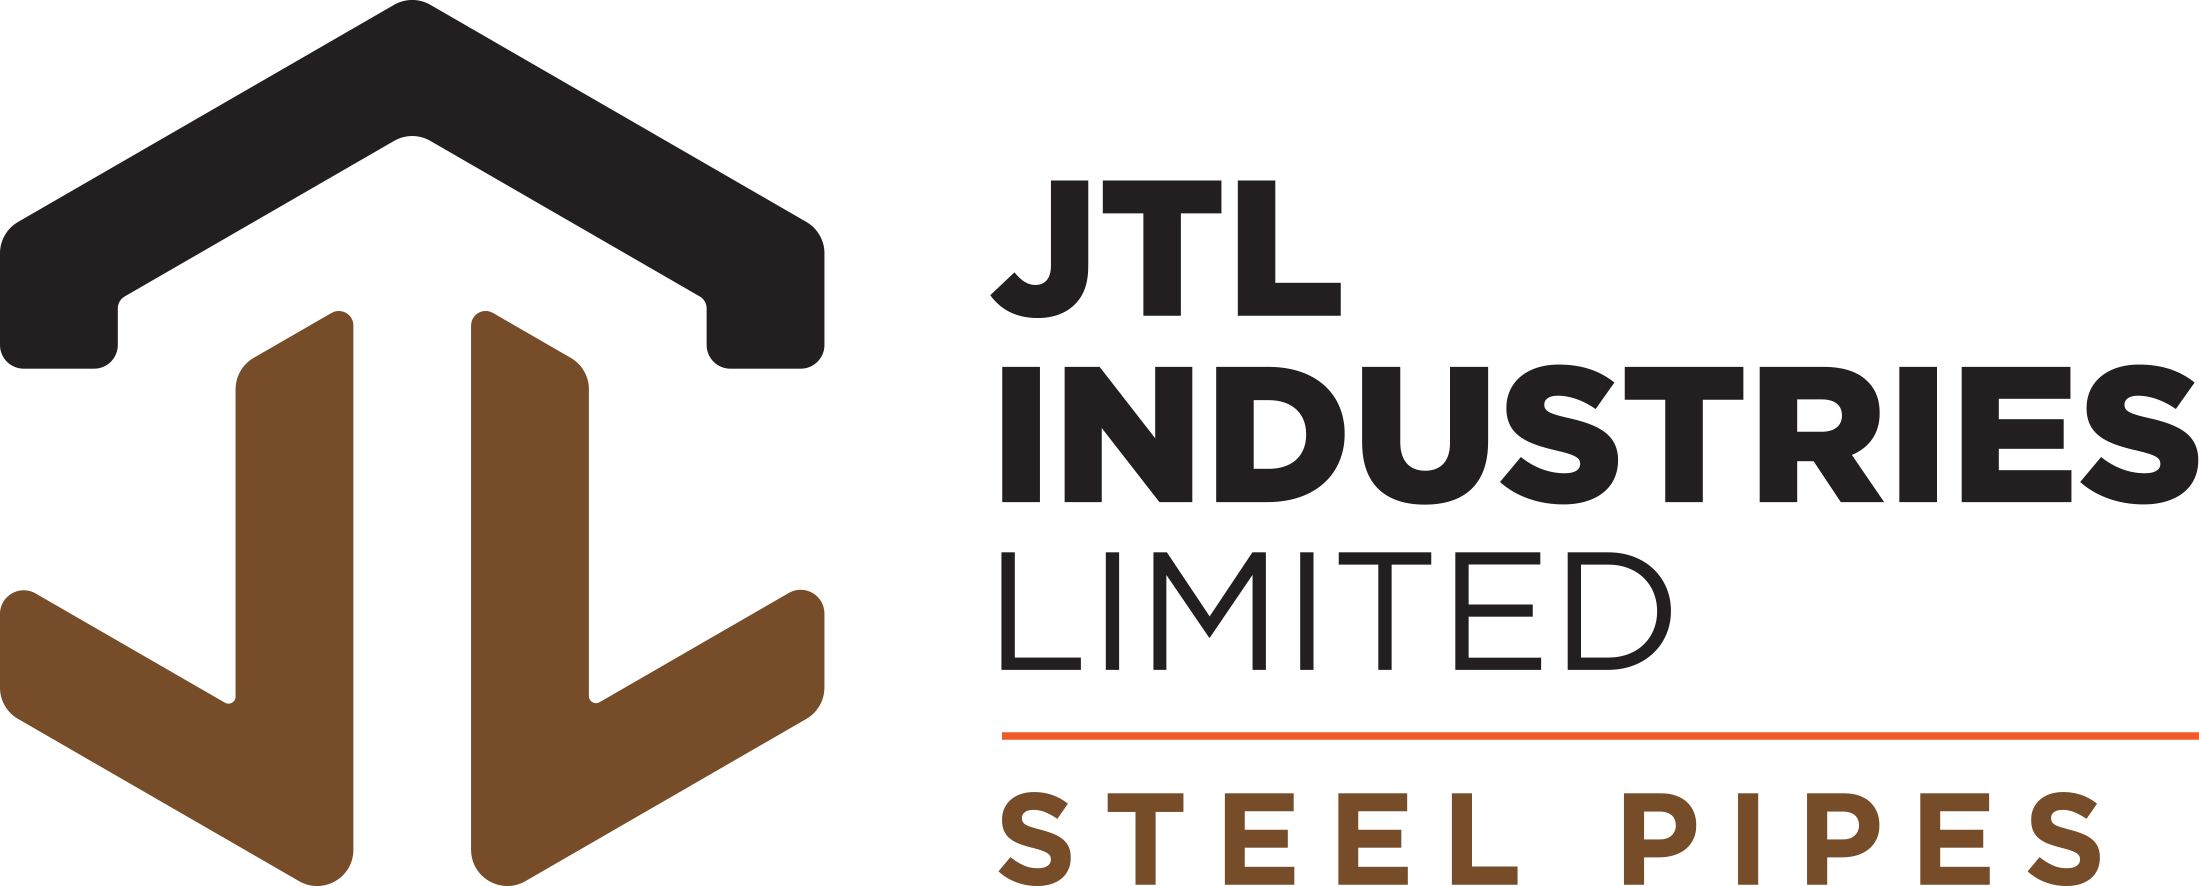 JTL Industries Limited